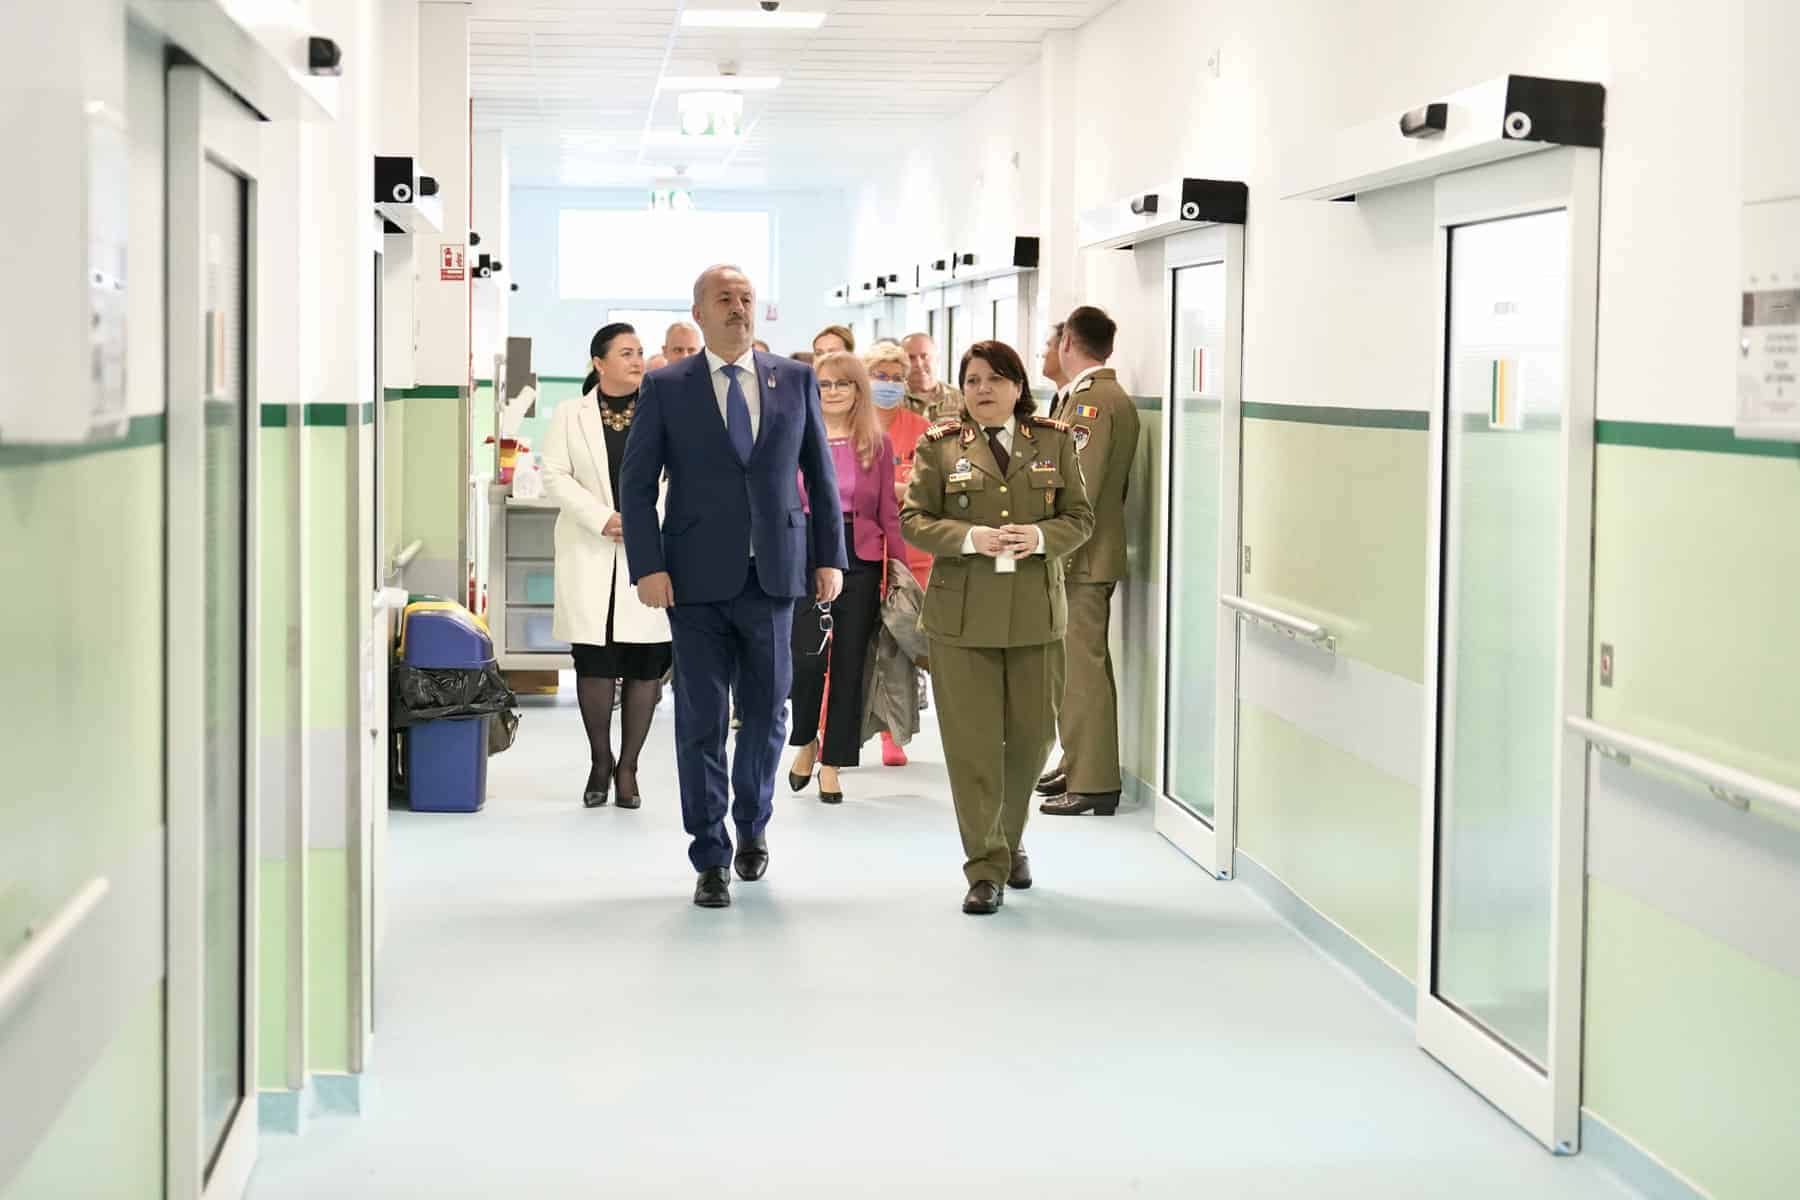 7 inaugurarea spatiilor reabilitate la spitalul militar din cluj napoca foto laurentiu turoi.jpg